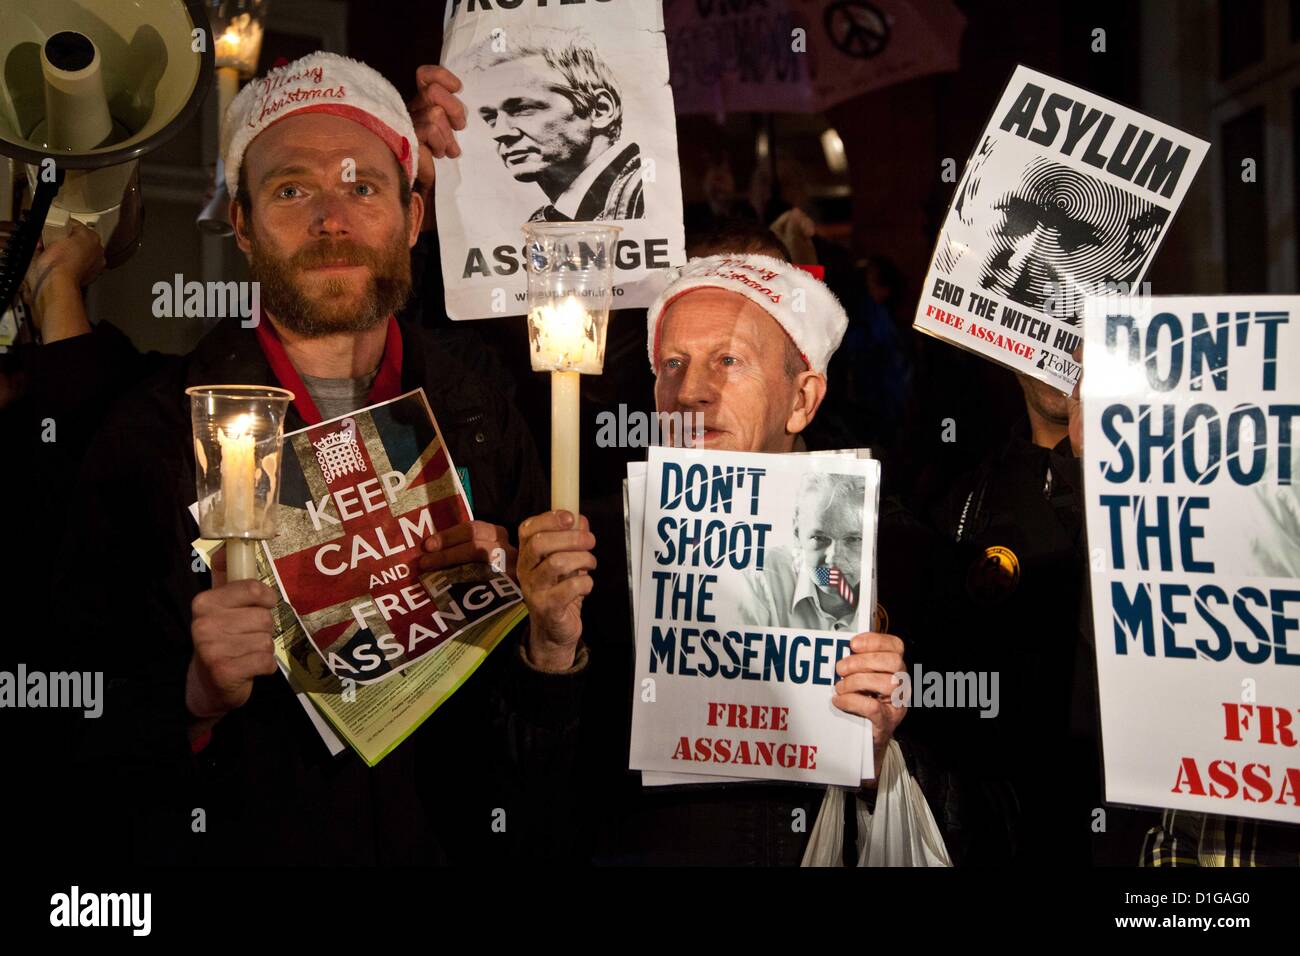 London, UK. 20th December 2012 Julian Assange supporters gathered outside the Ecuadorian Embassy to hear him make a speech. Stock Photo